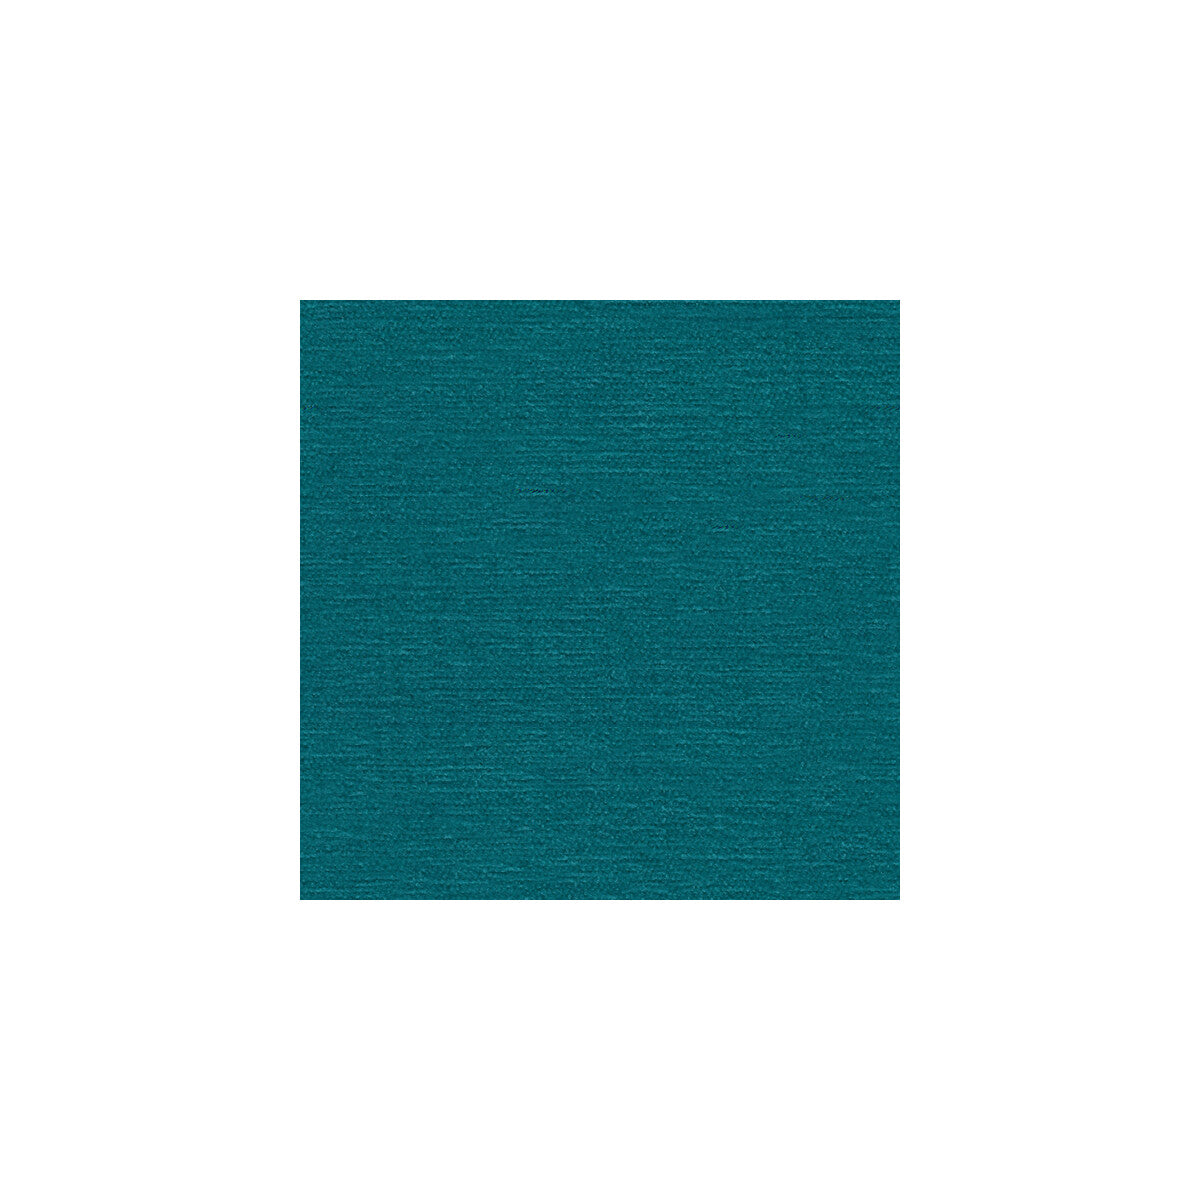 Kravet Smart fabric in 26837-131 color - pattern 26837.131.0 - by Kravet Smart